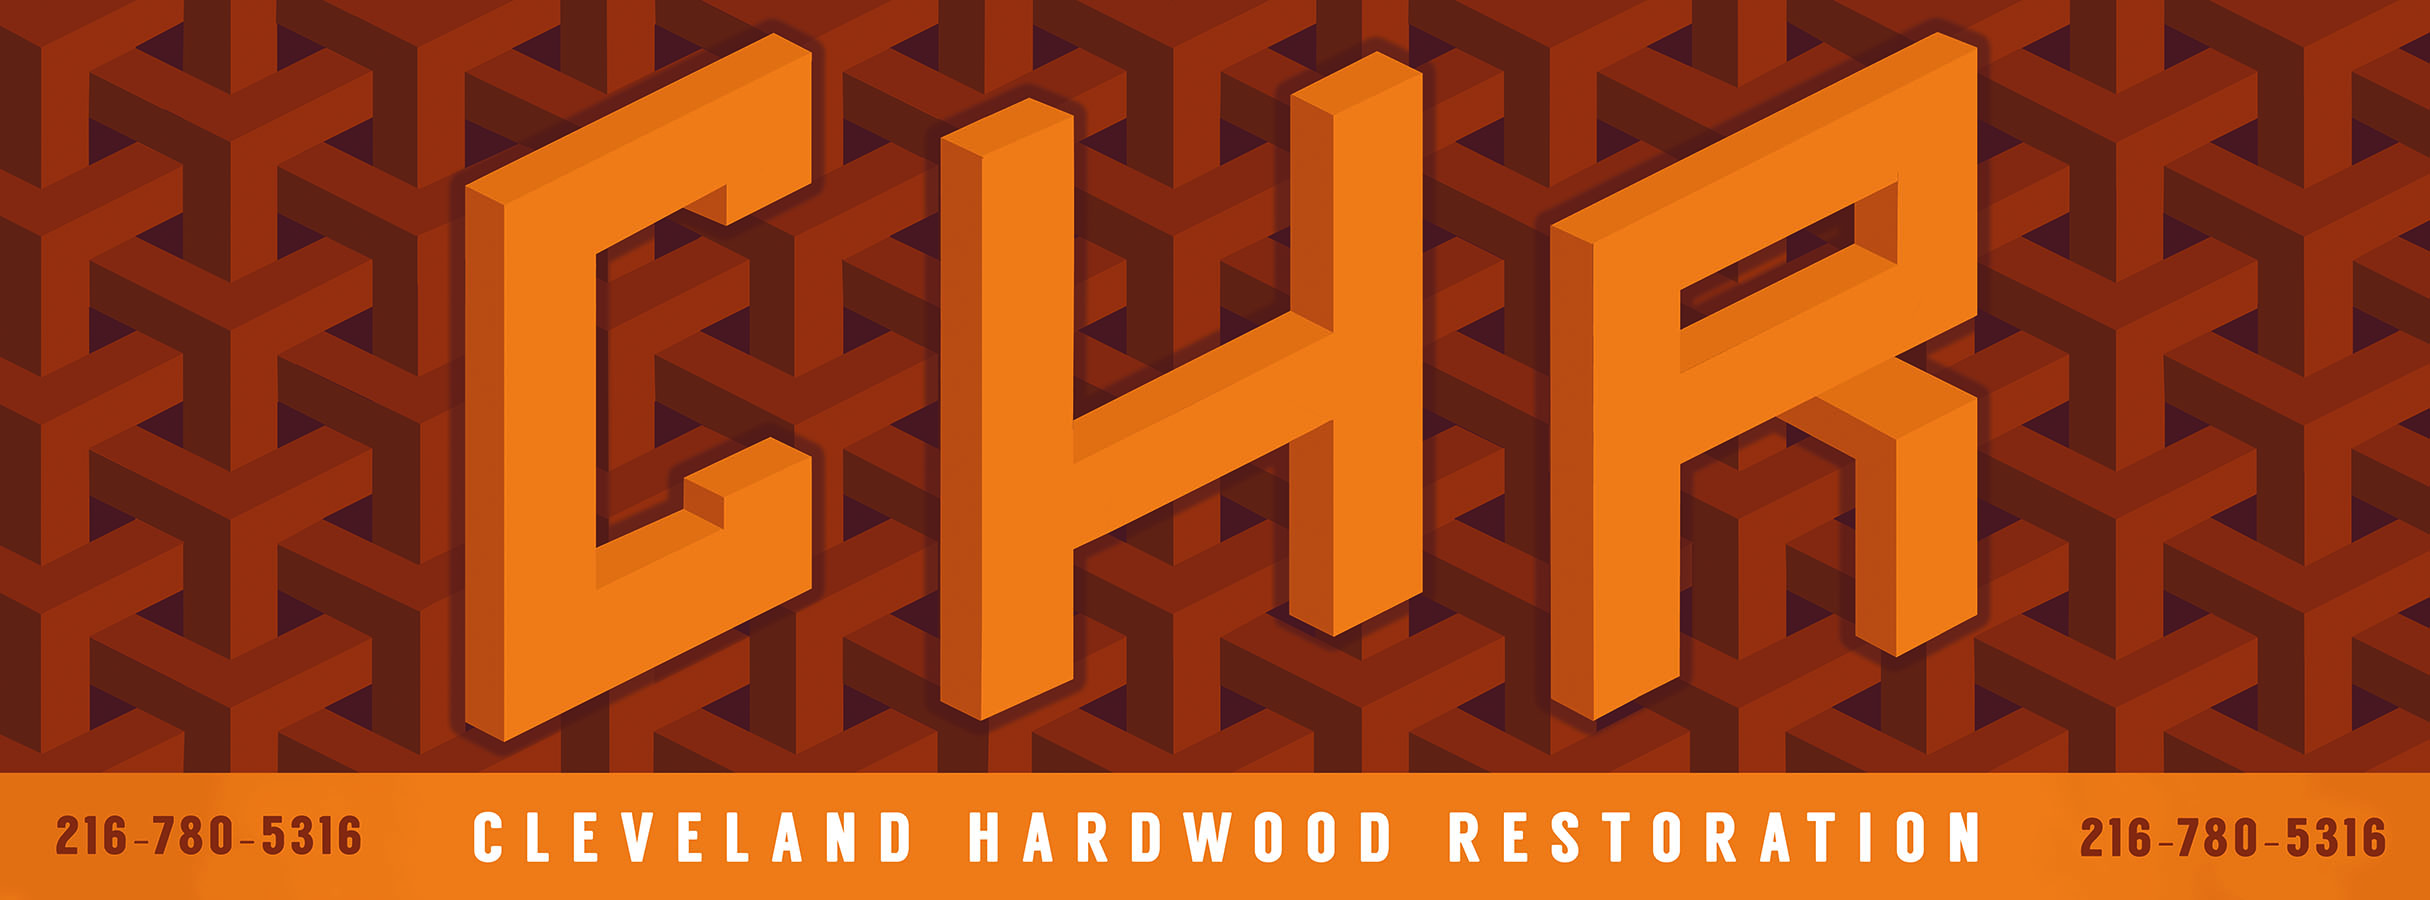 Cleveland Hardwood Restoration